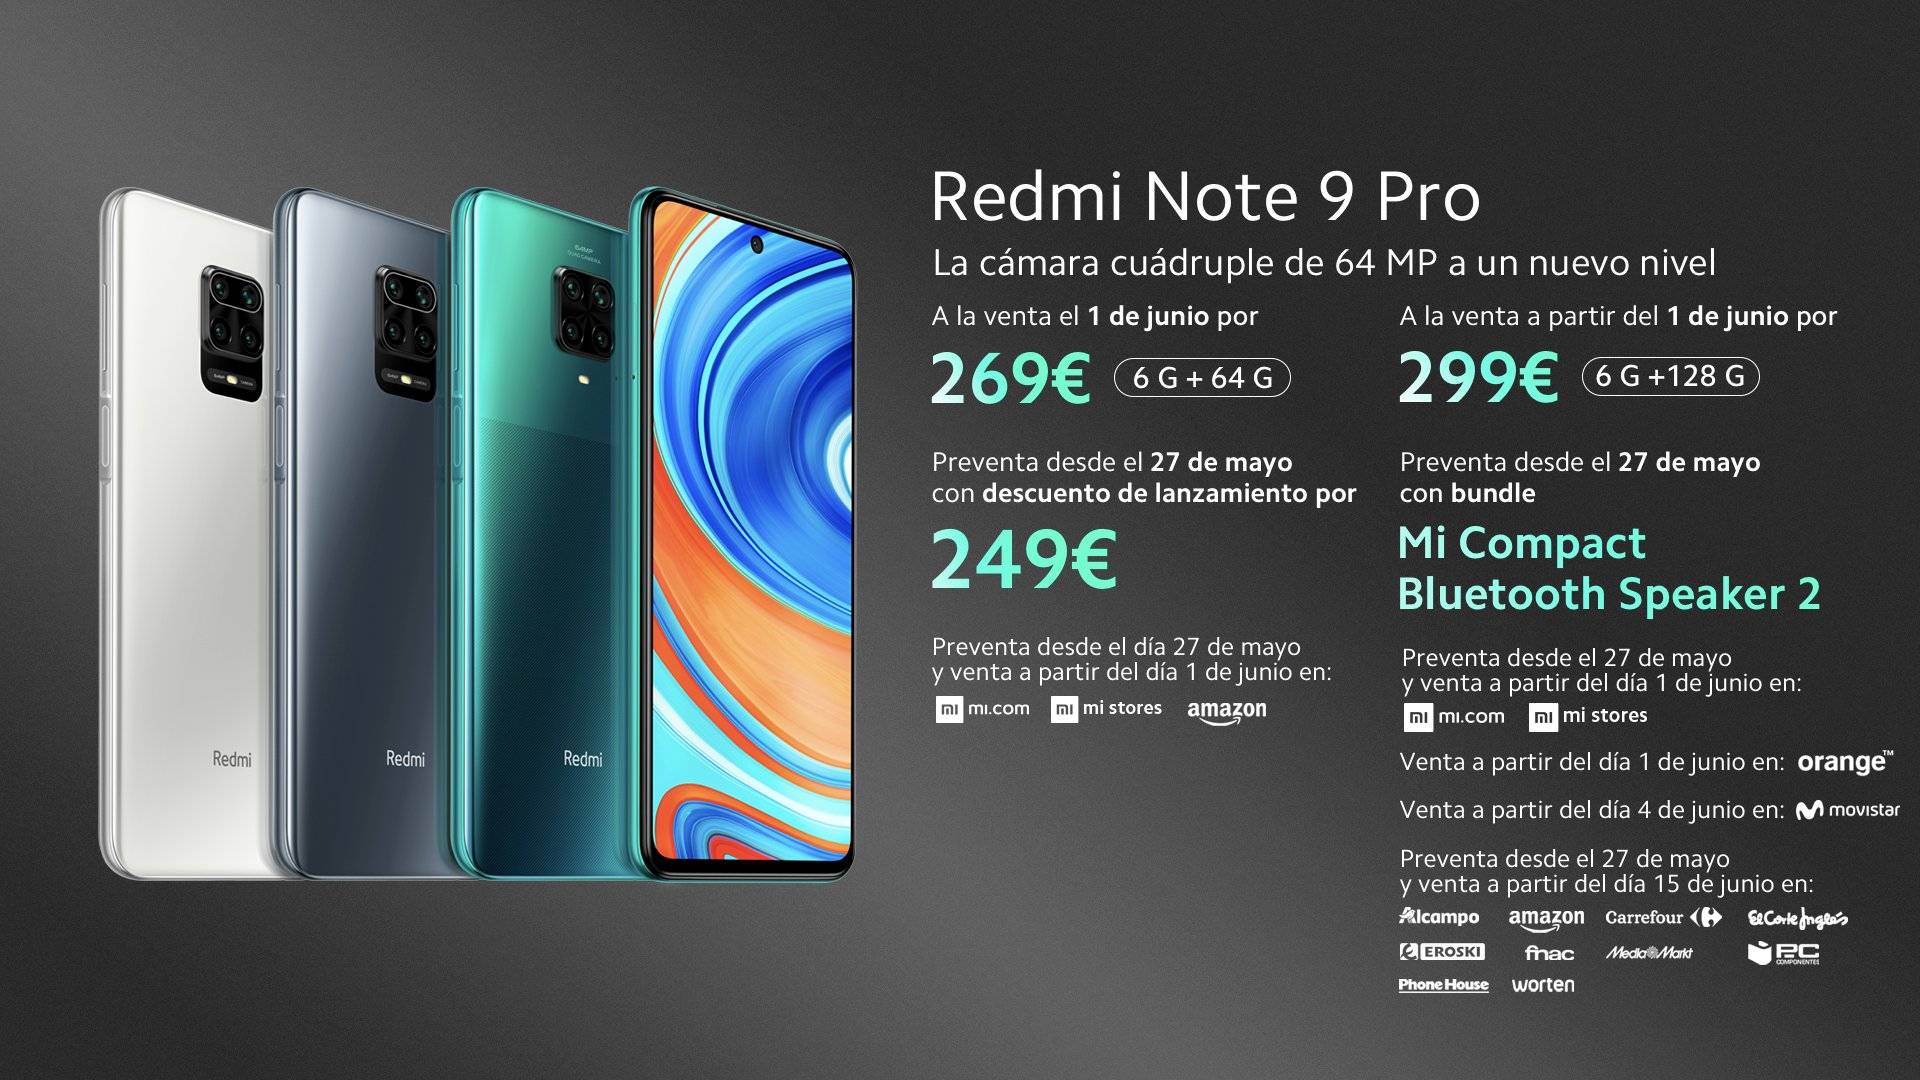 Xiaomi redmi note 4: обзор характеристик и возможностей смартфона